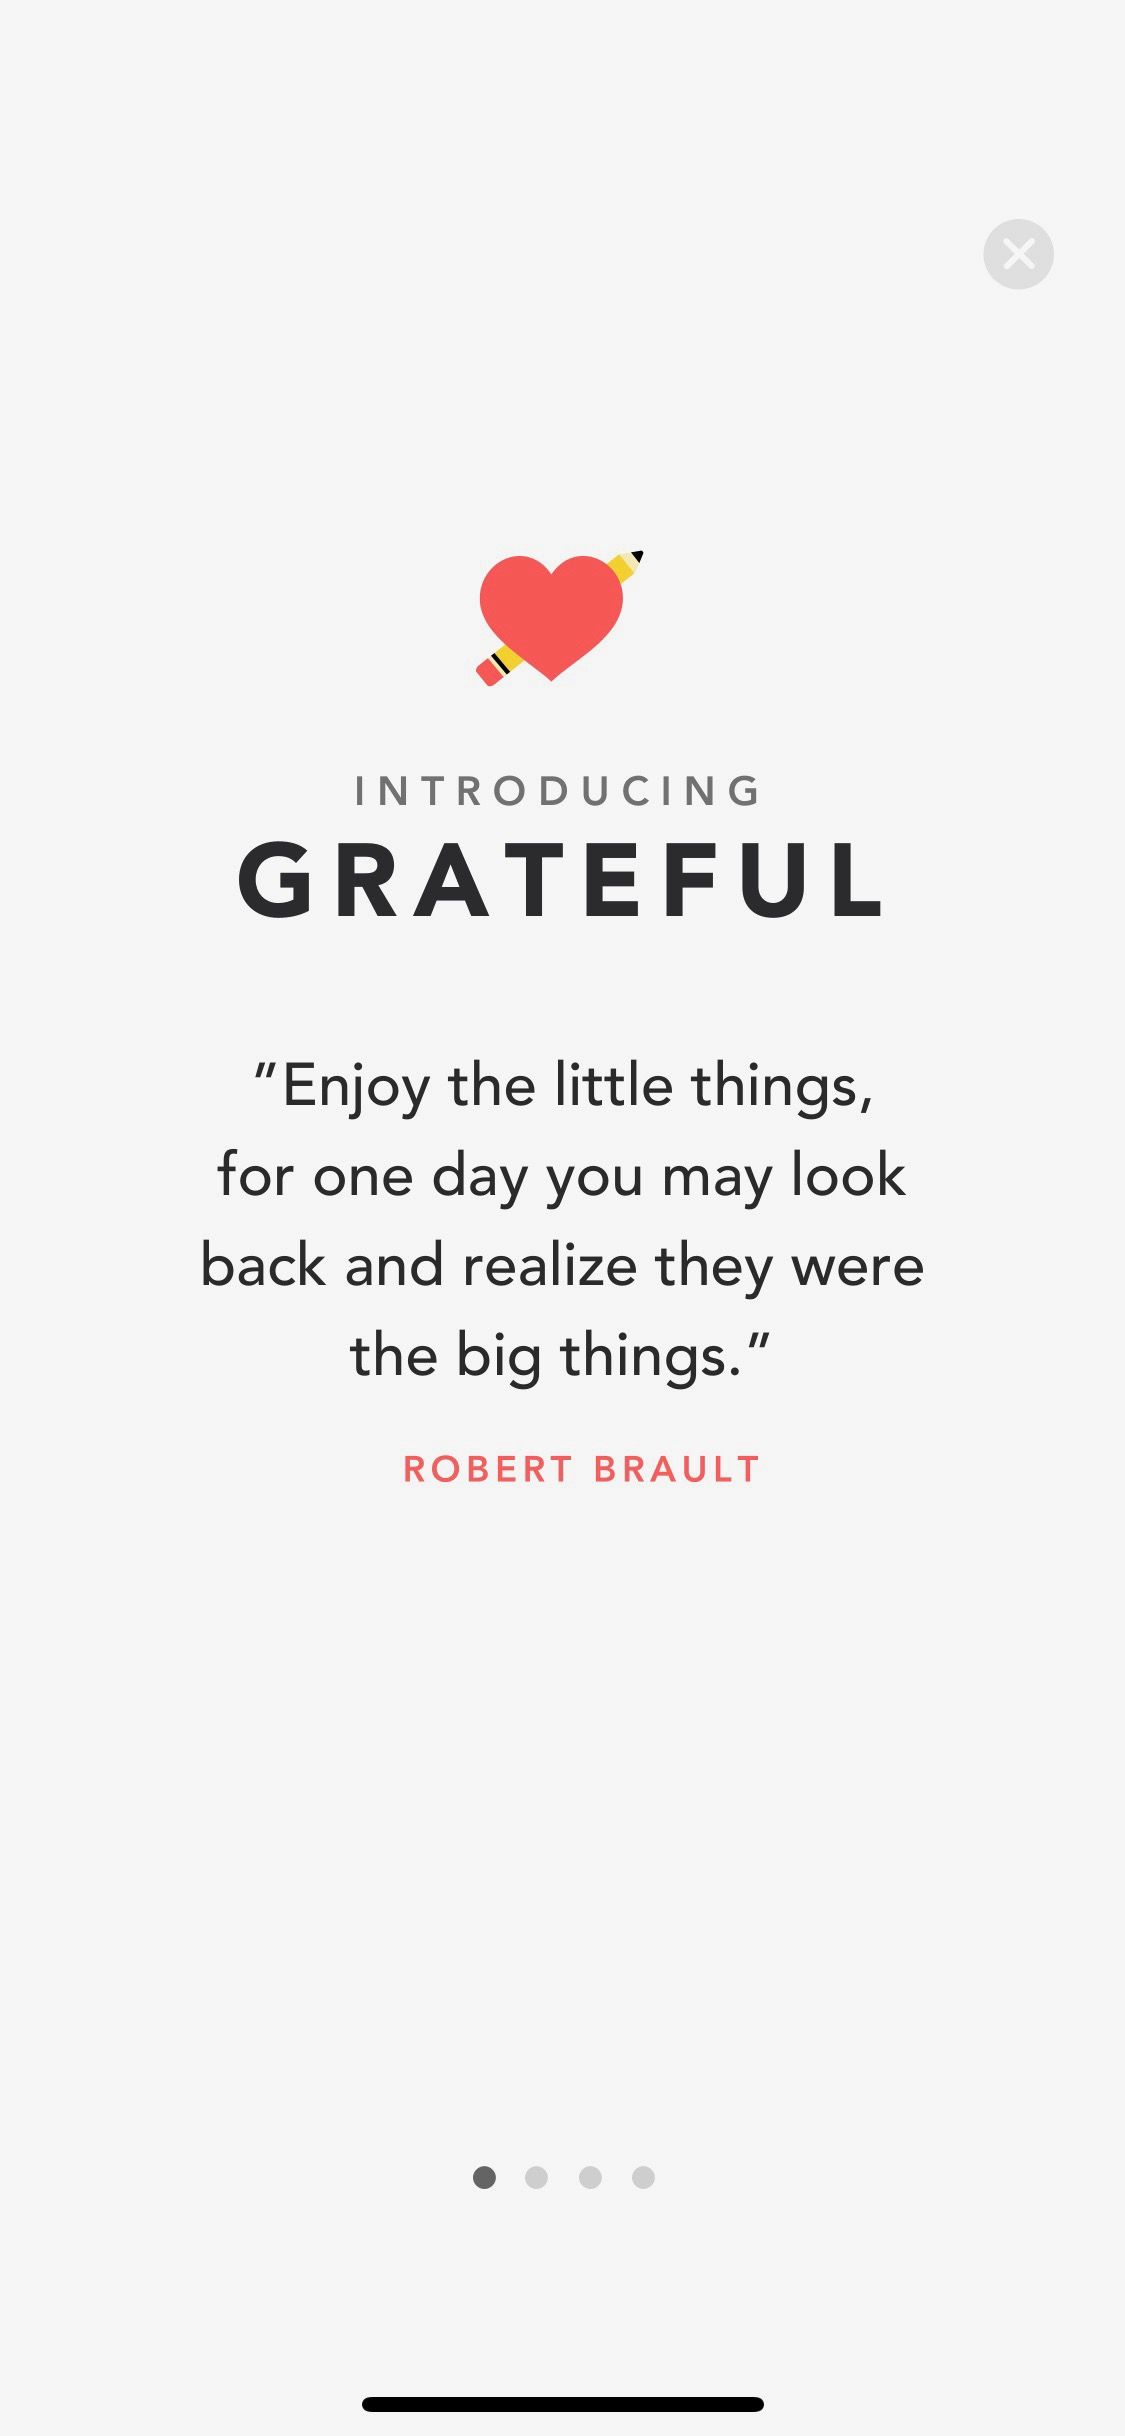 Screenshot of Grateful app showing welcome screen